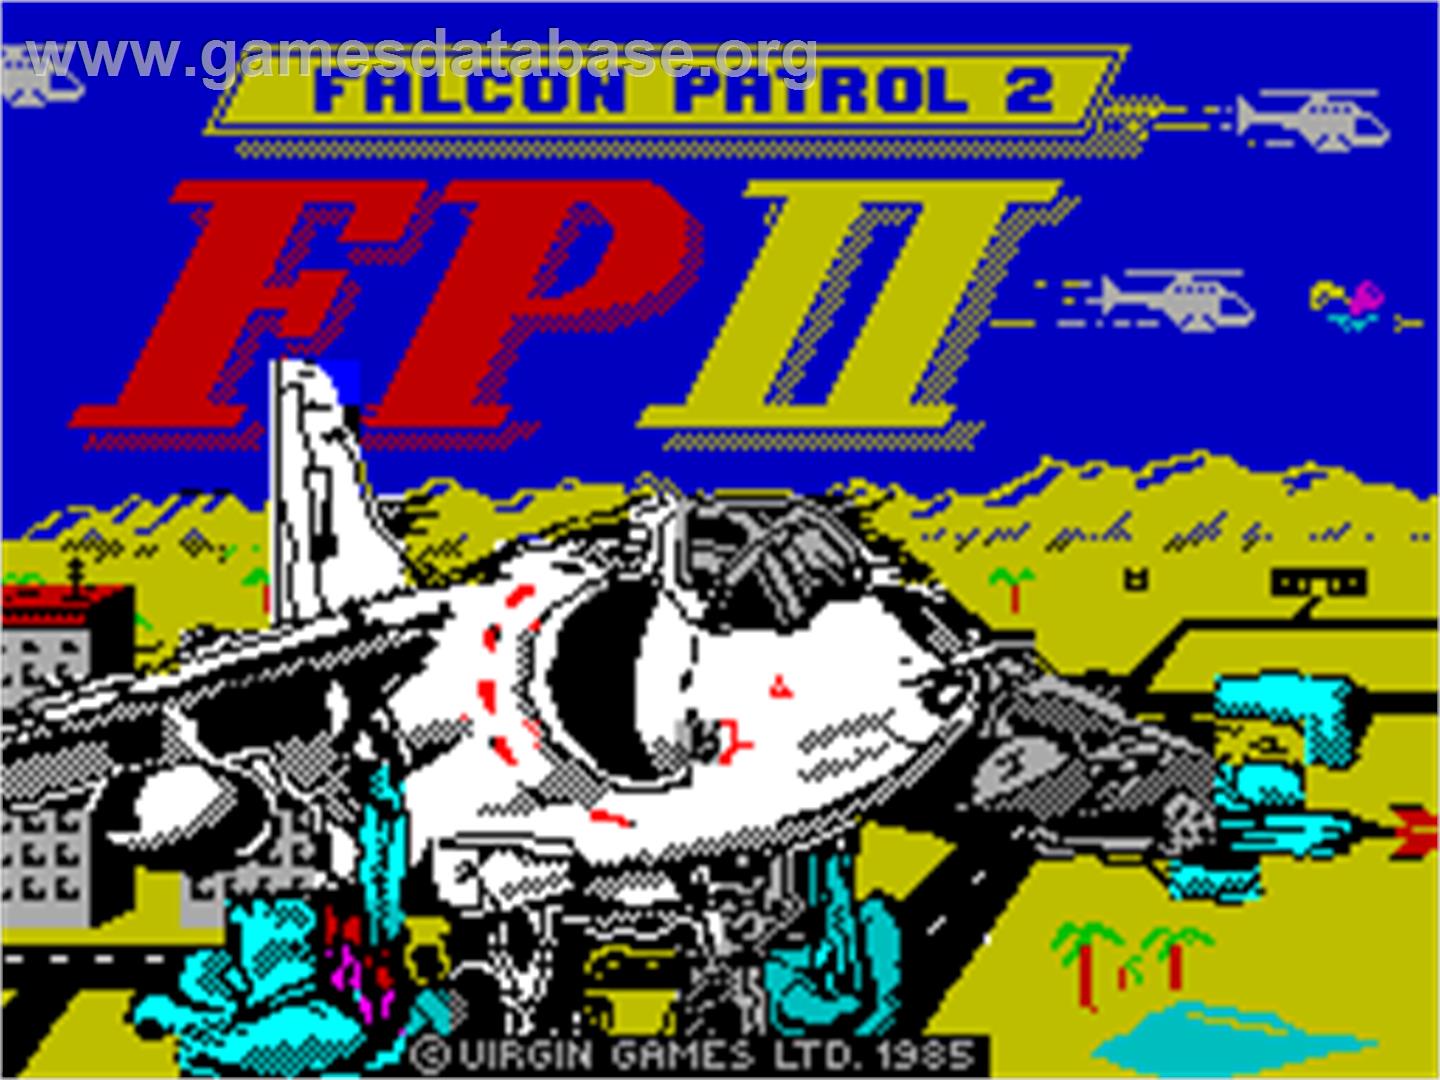 Falcon Patrol II - Sinclair ZX Spectrum - Artwork - Title Screen